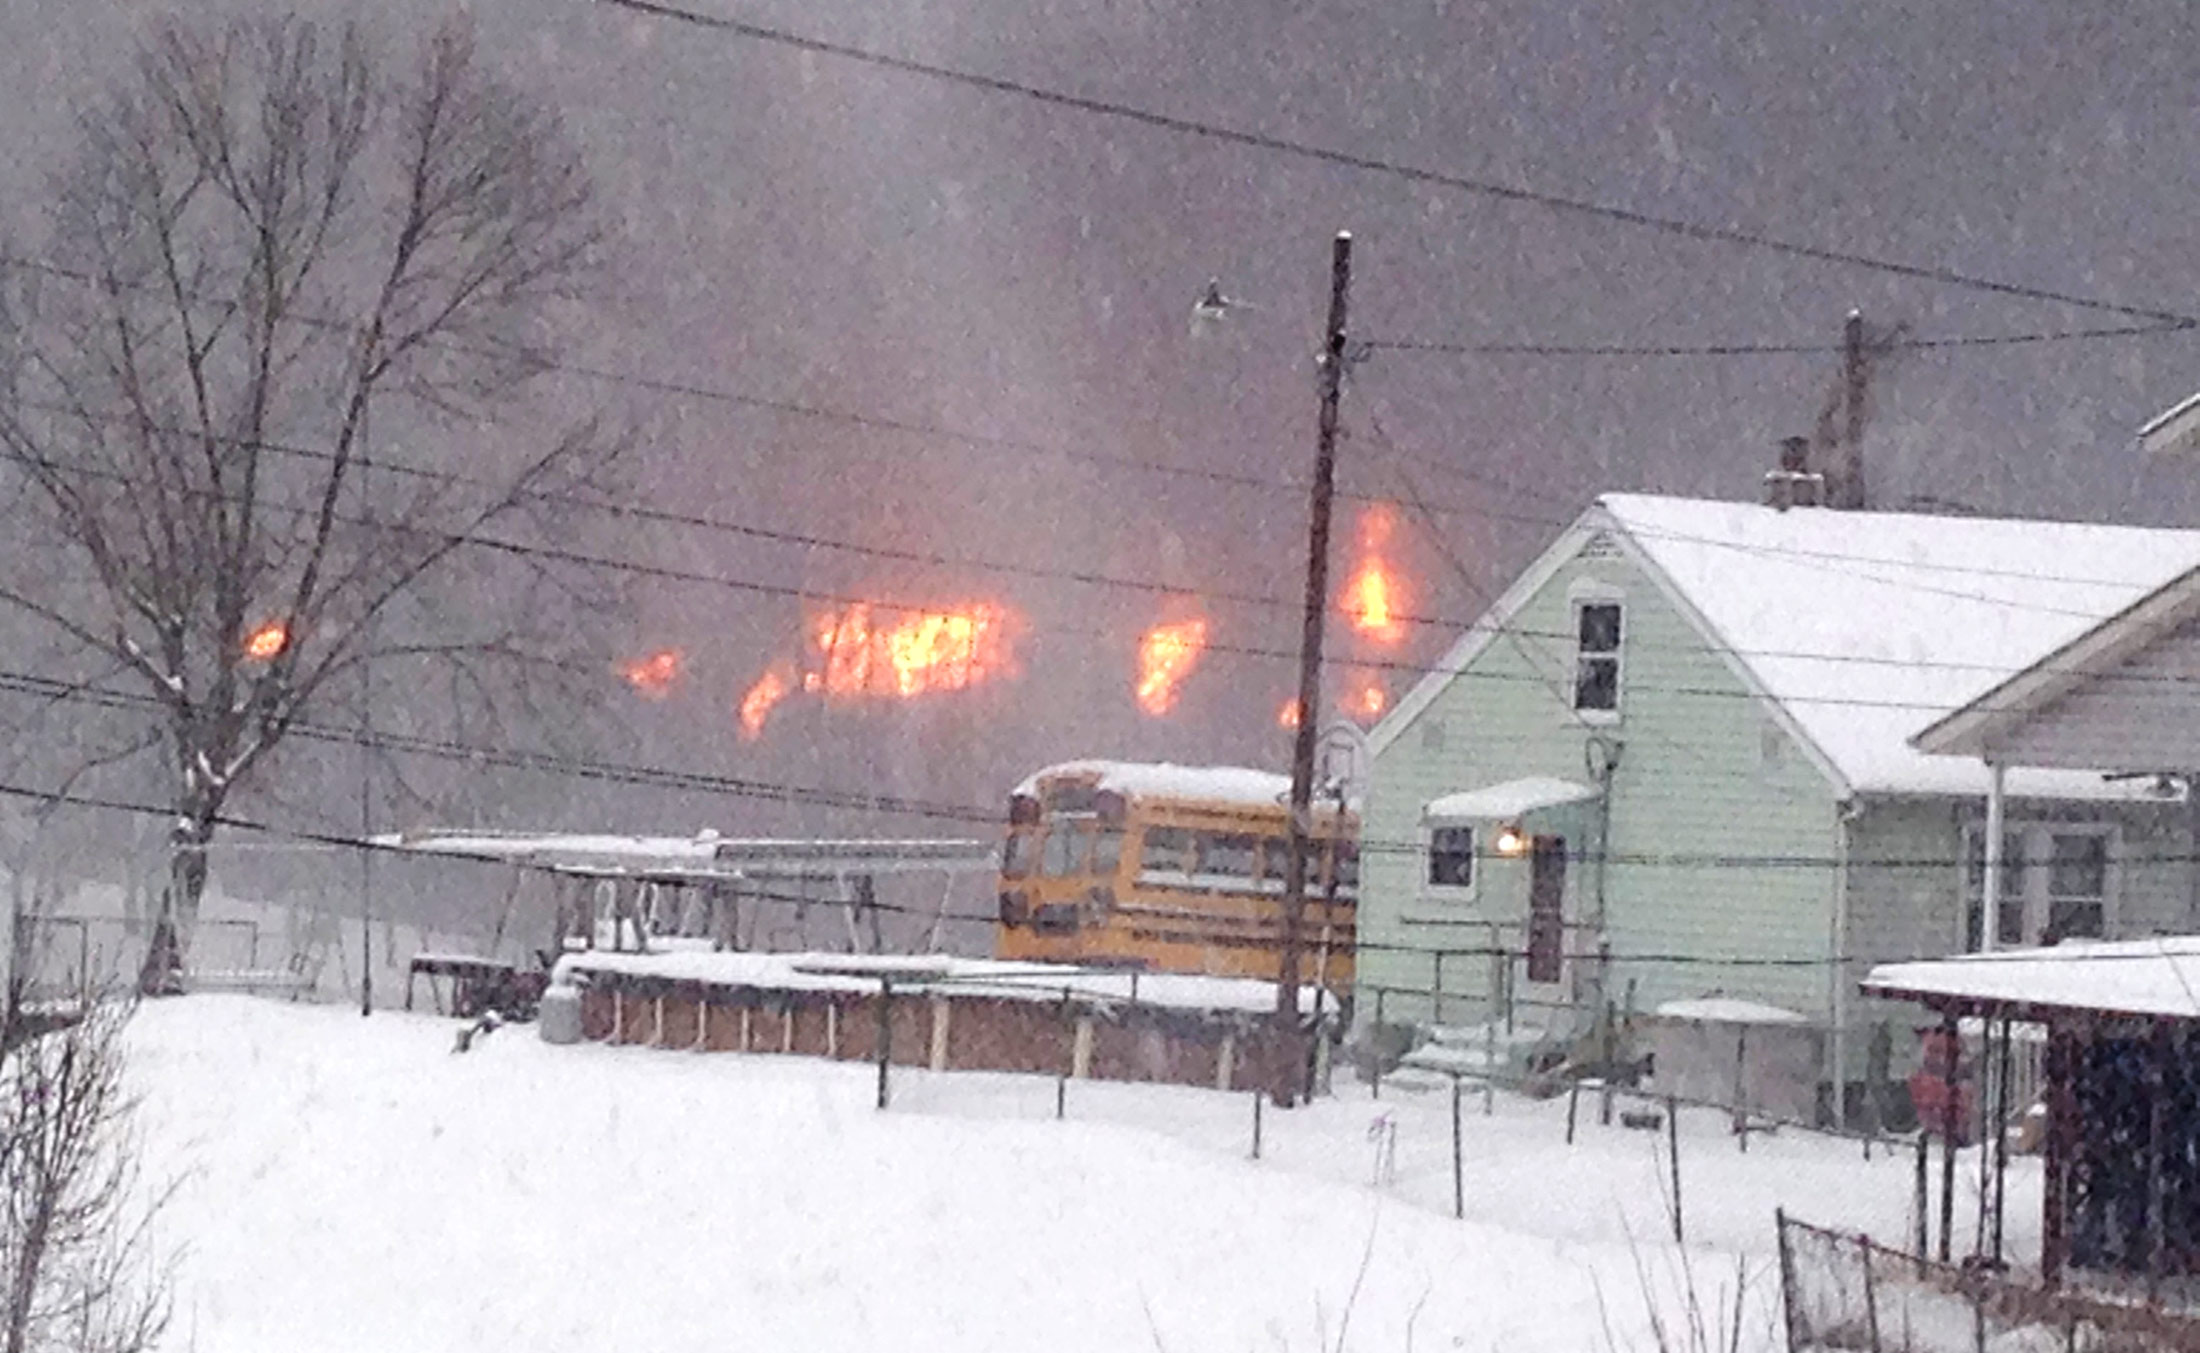 A fire burns after a train derailment near Charleston, West Virginia on Feb. 16, 2015.
